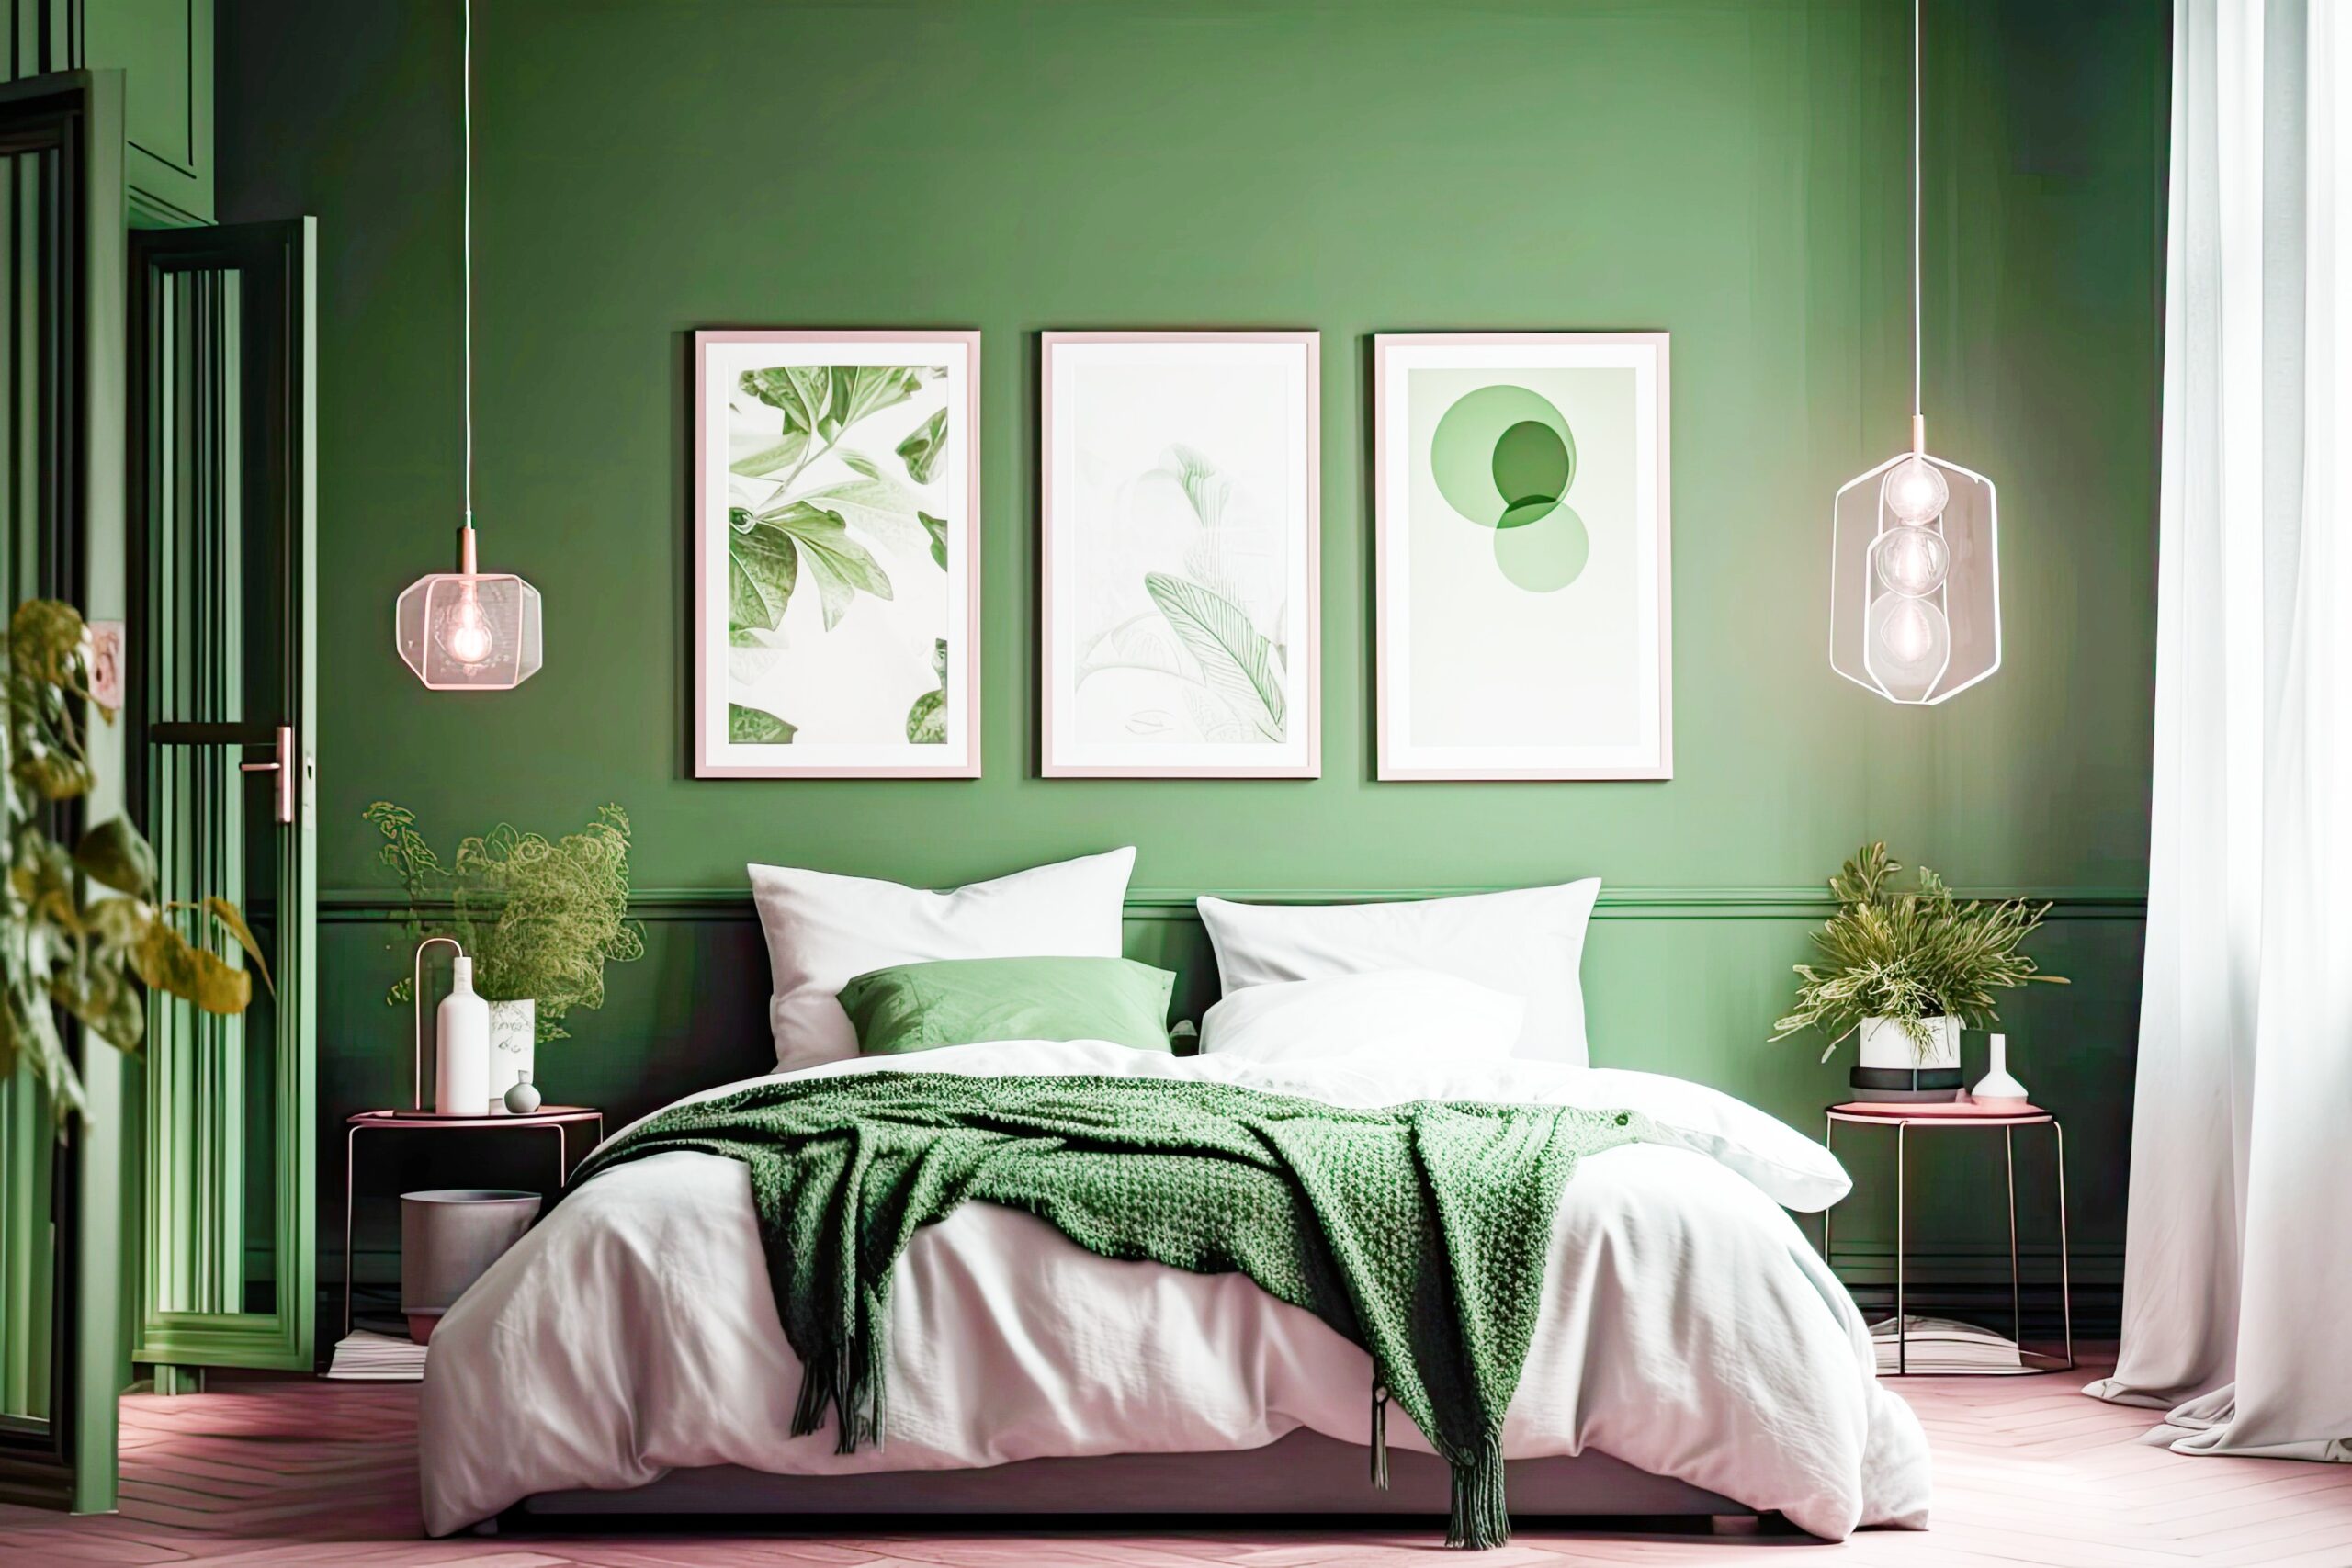 <img src="green.jpg" alt="green themed cozy autumn bedroom/>